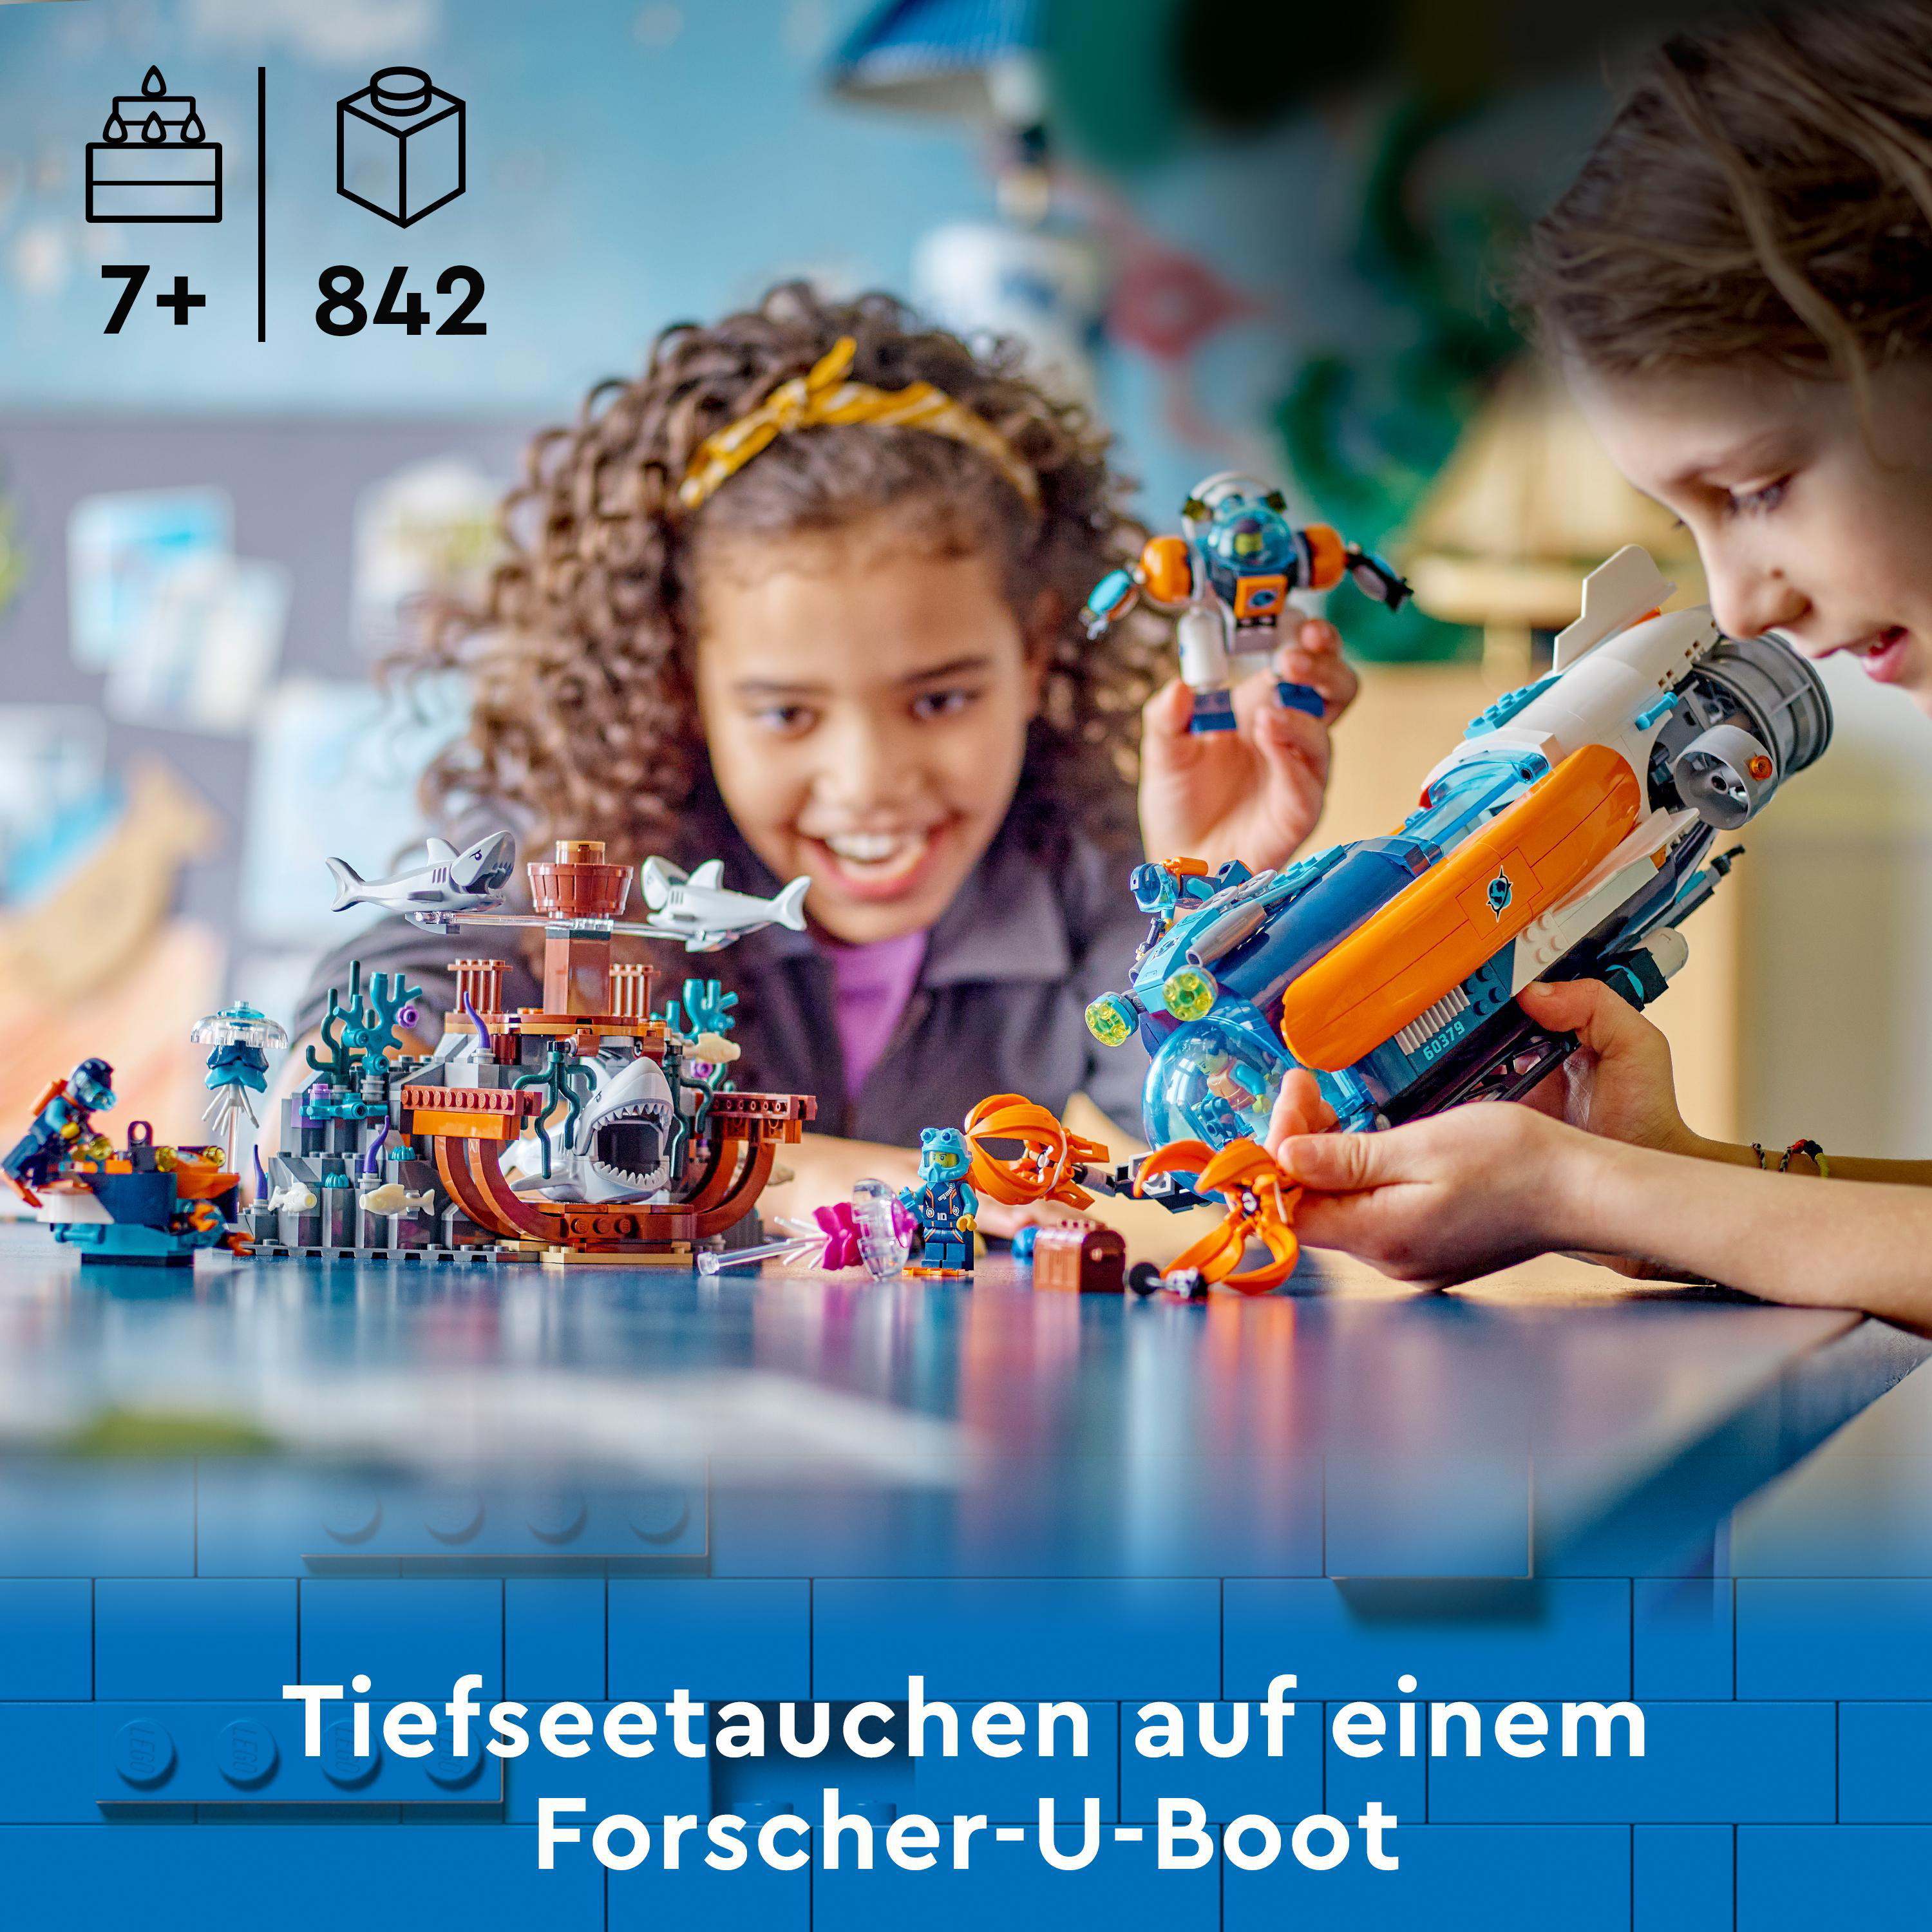 Bausatz, Forscher-U-Boot 60379 City Mehrfarbig LEGO